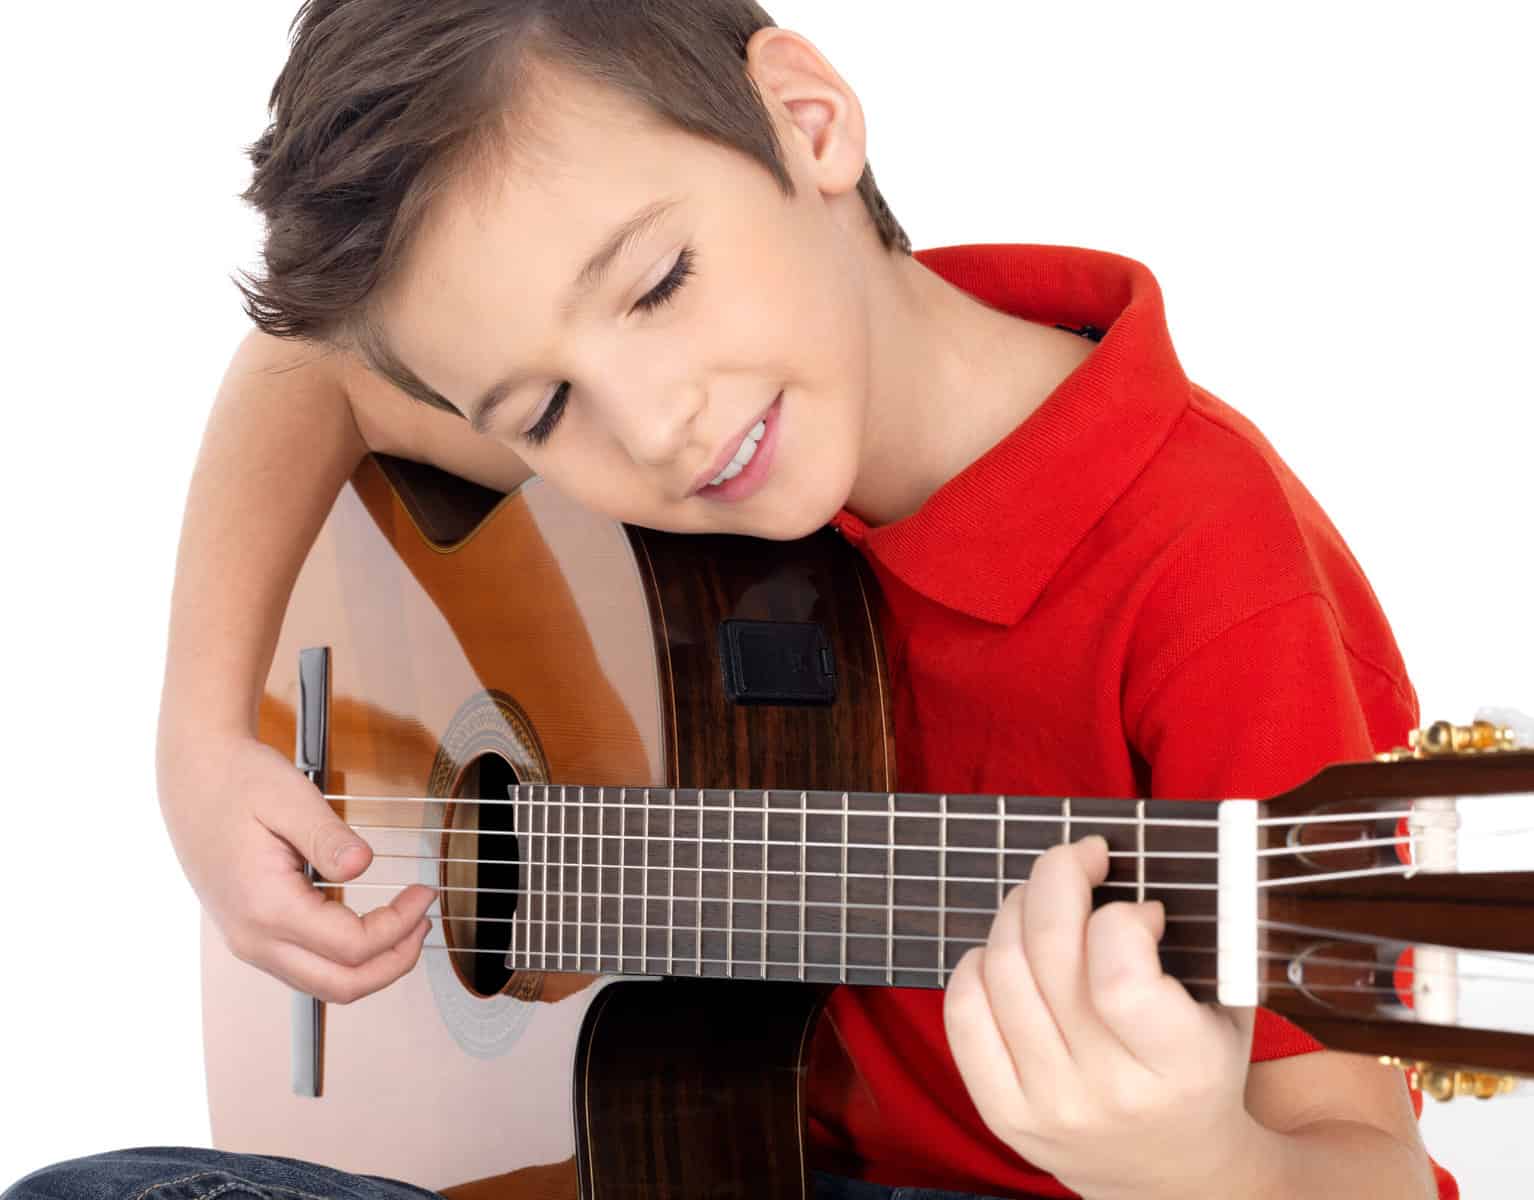 bonita-springs-affordable-guitar-lessons-for-children